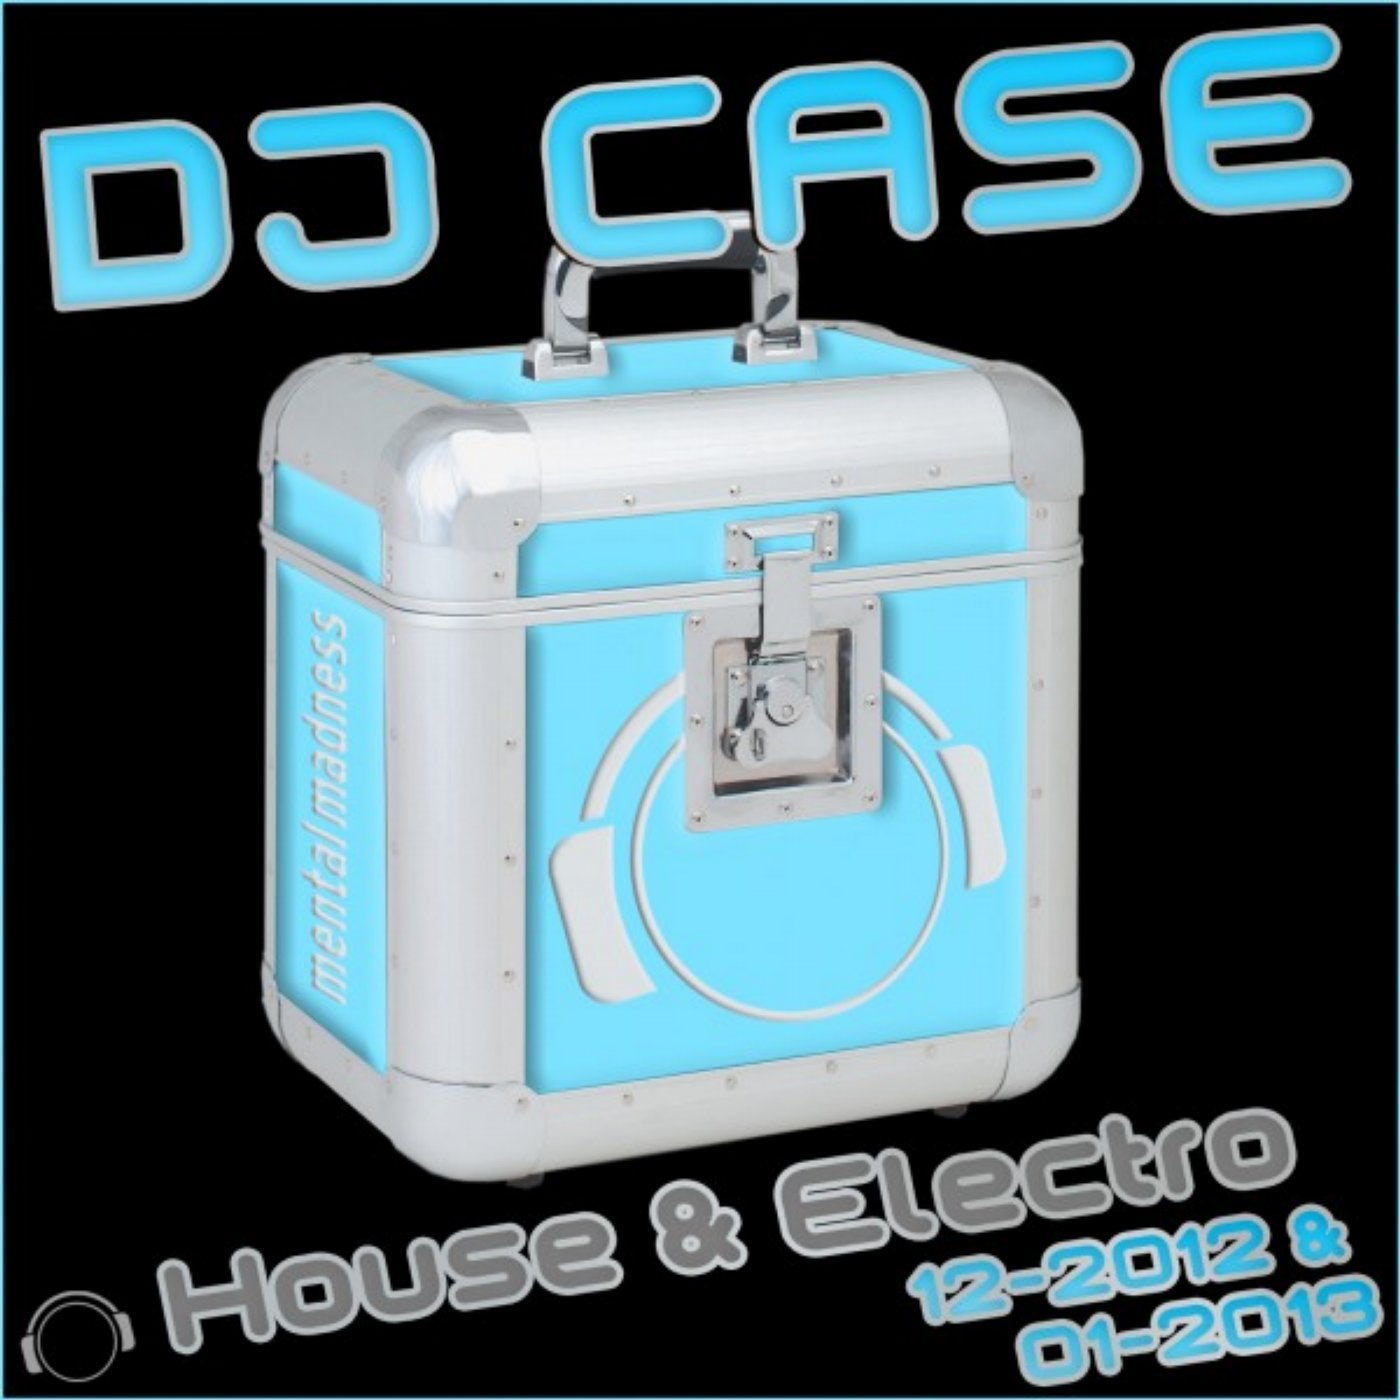 DJ Case House & Electro: 12-2012 & 01-2013